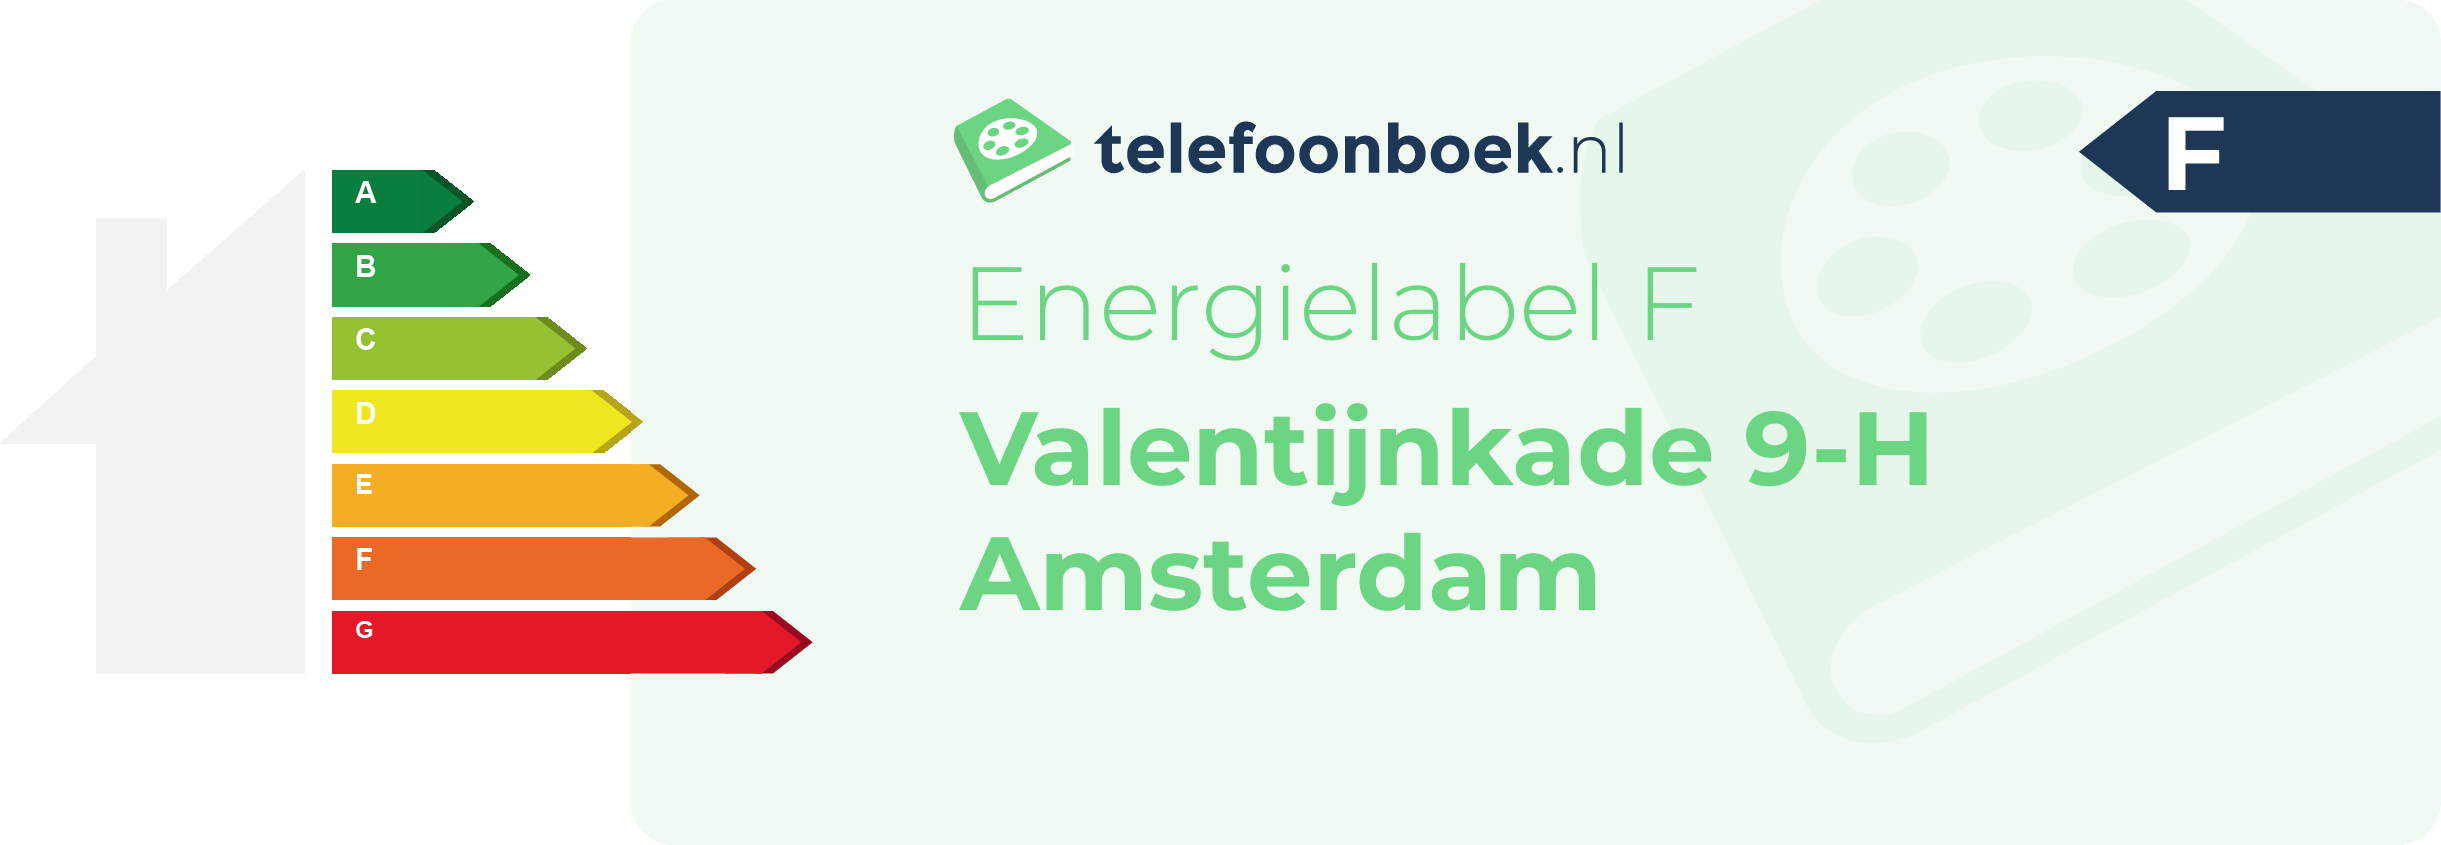 Energielabel Valentijnkade 9-H Amsterdam